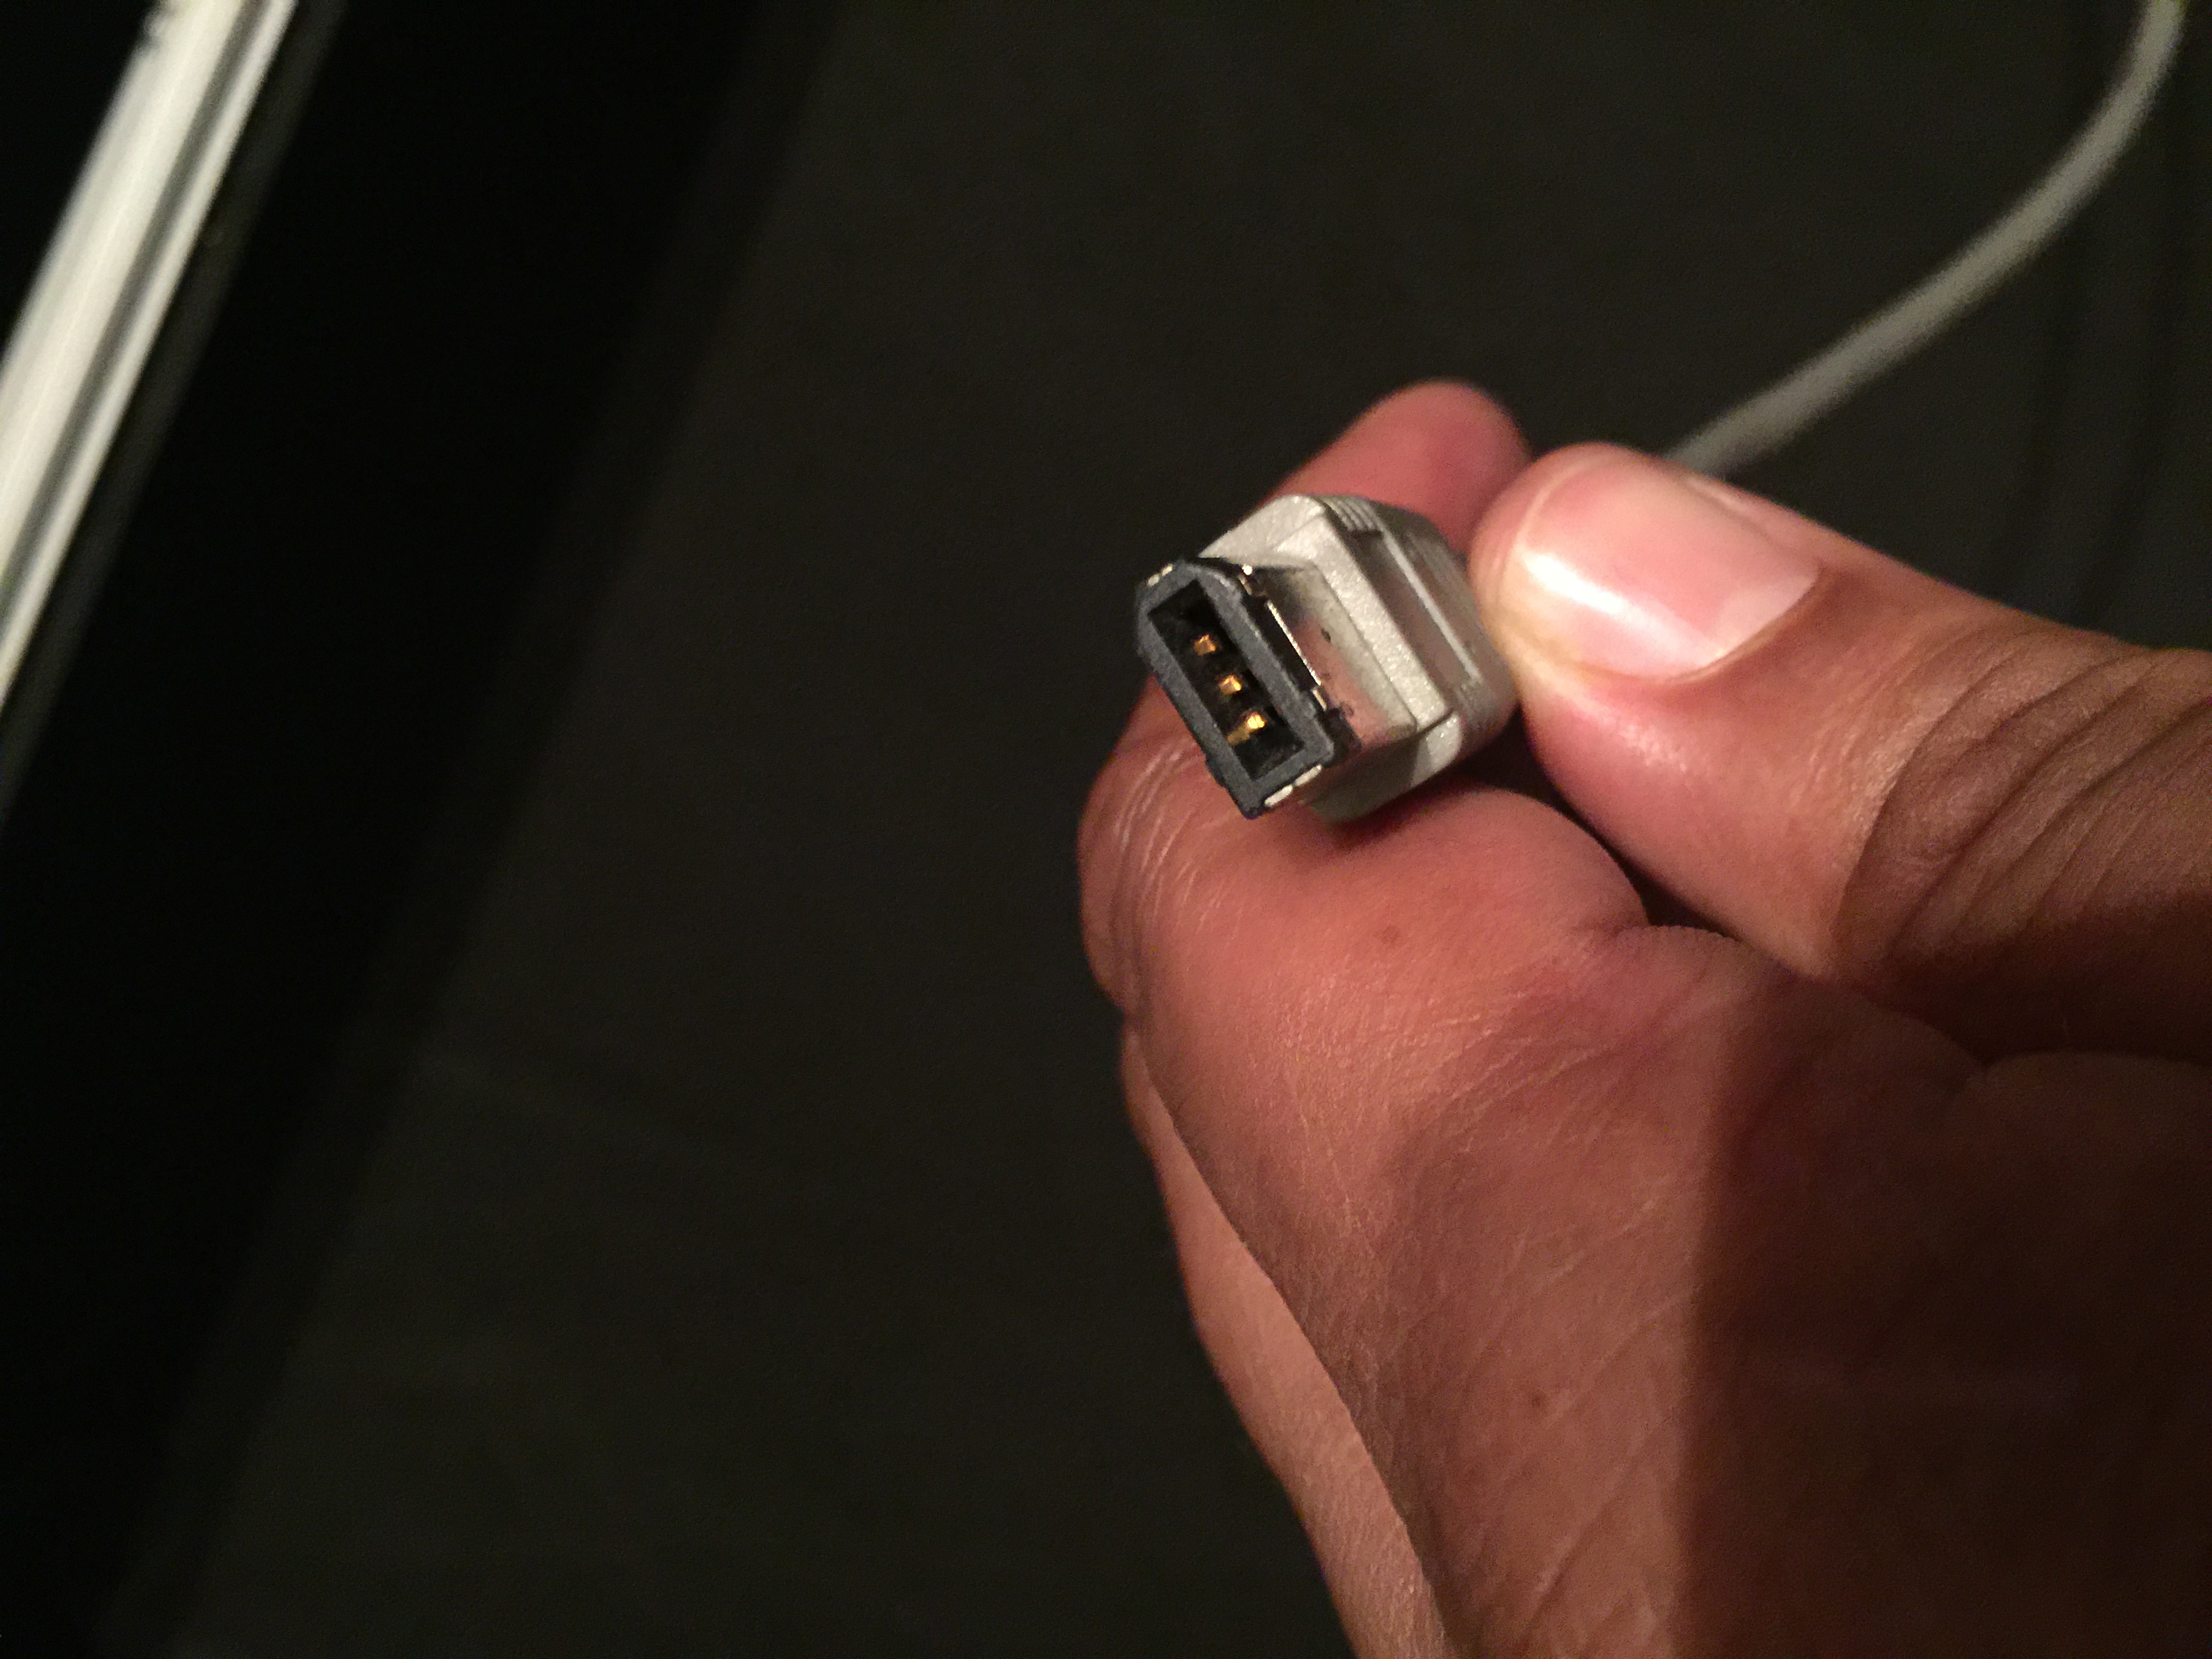 6 Pin Firewire Thunderbolt - Apple Community